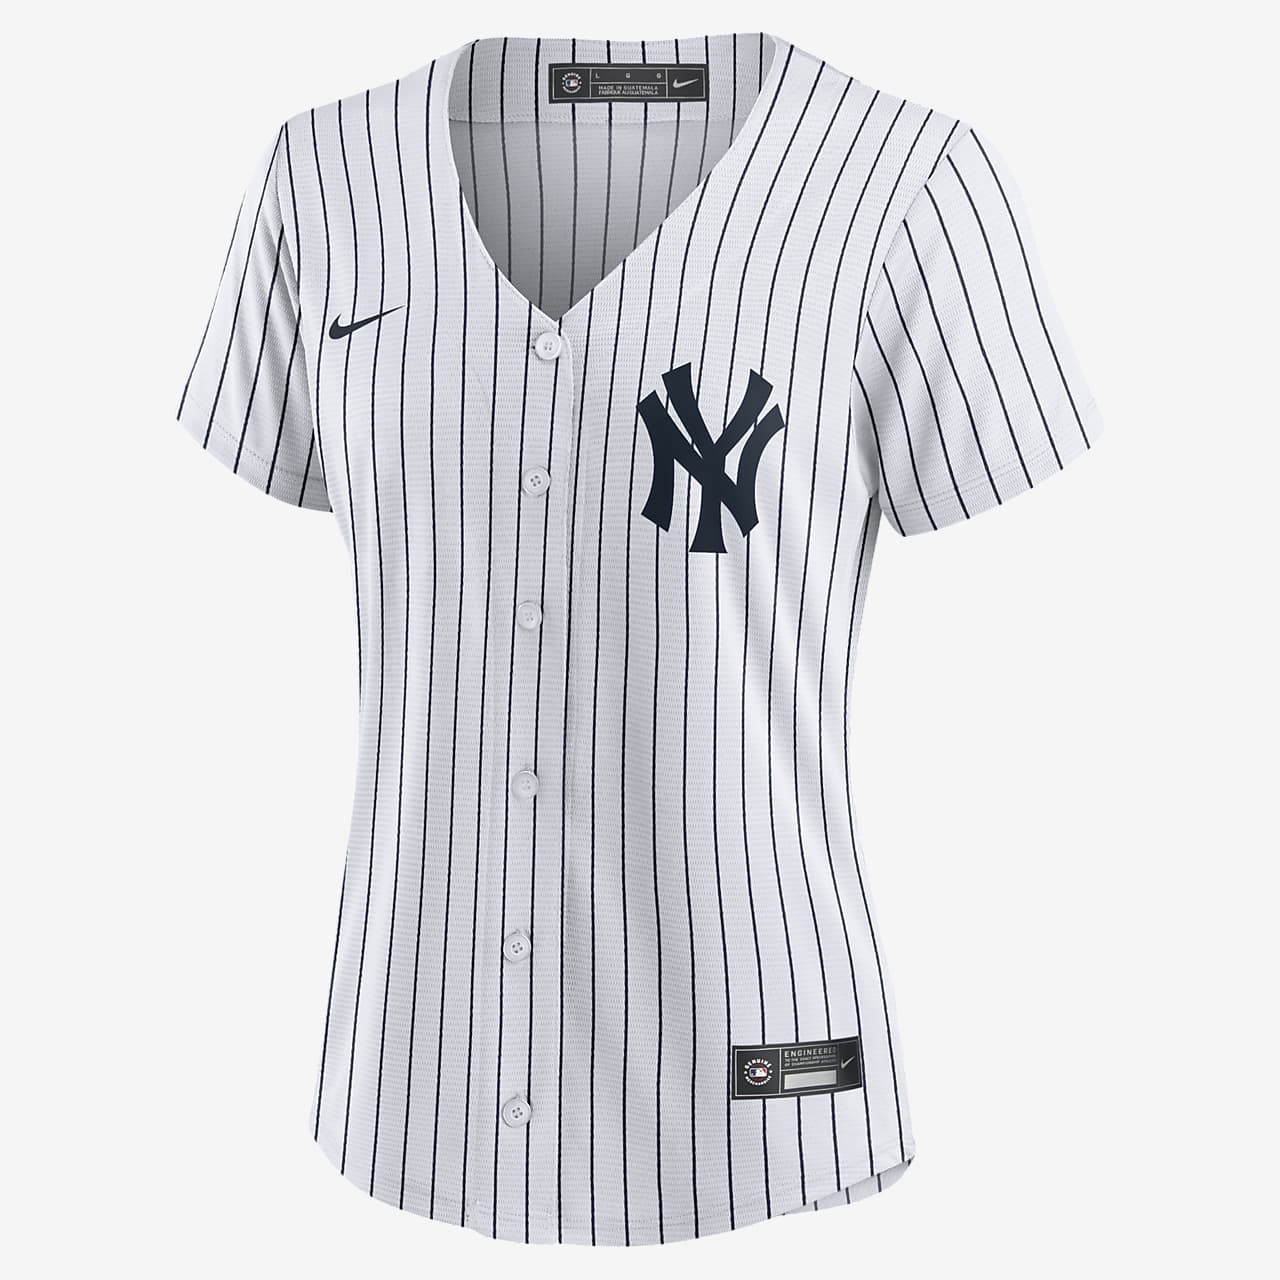 MLB New York Yankees (Aaron Judge) Women's Replica Baseball Jersey